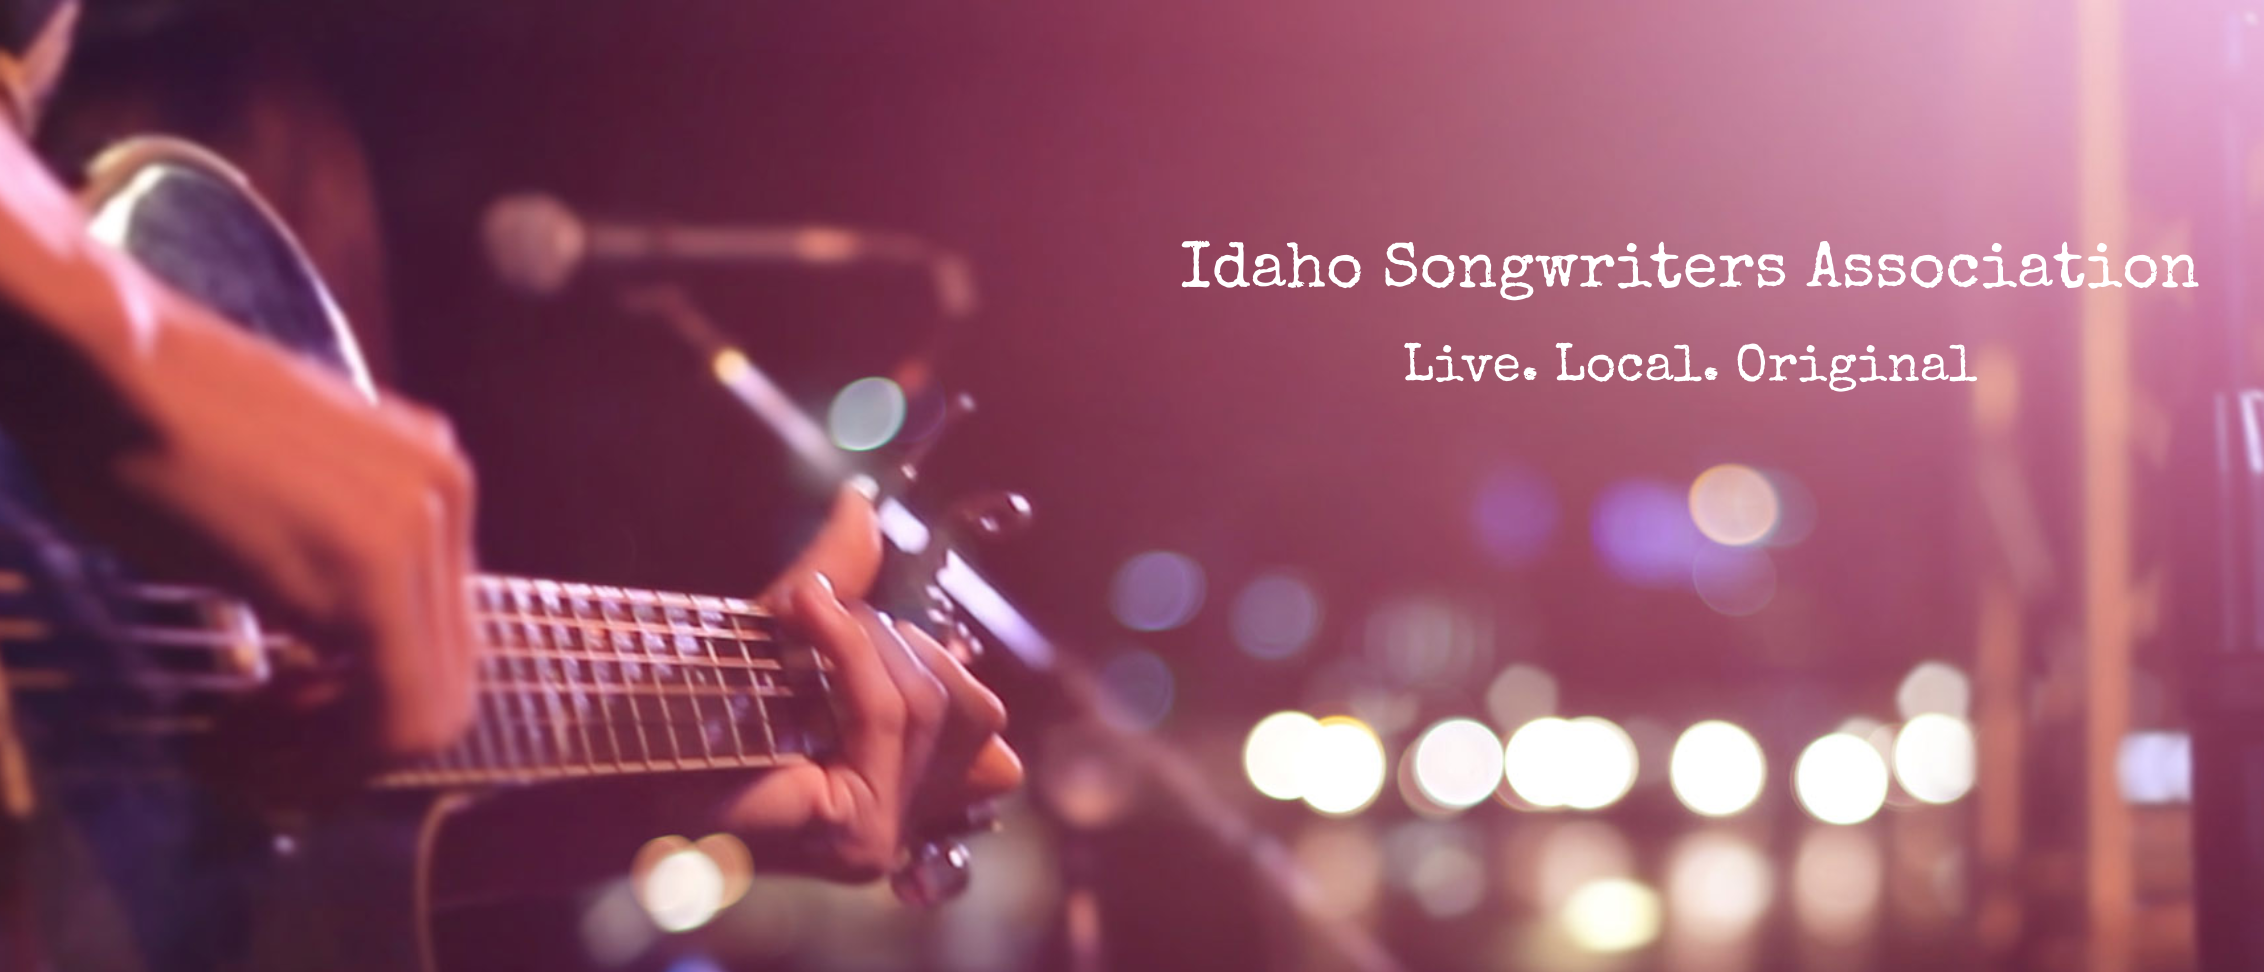 Idaho Songwriters Association Forum